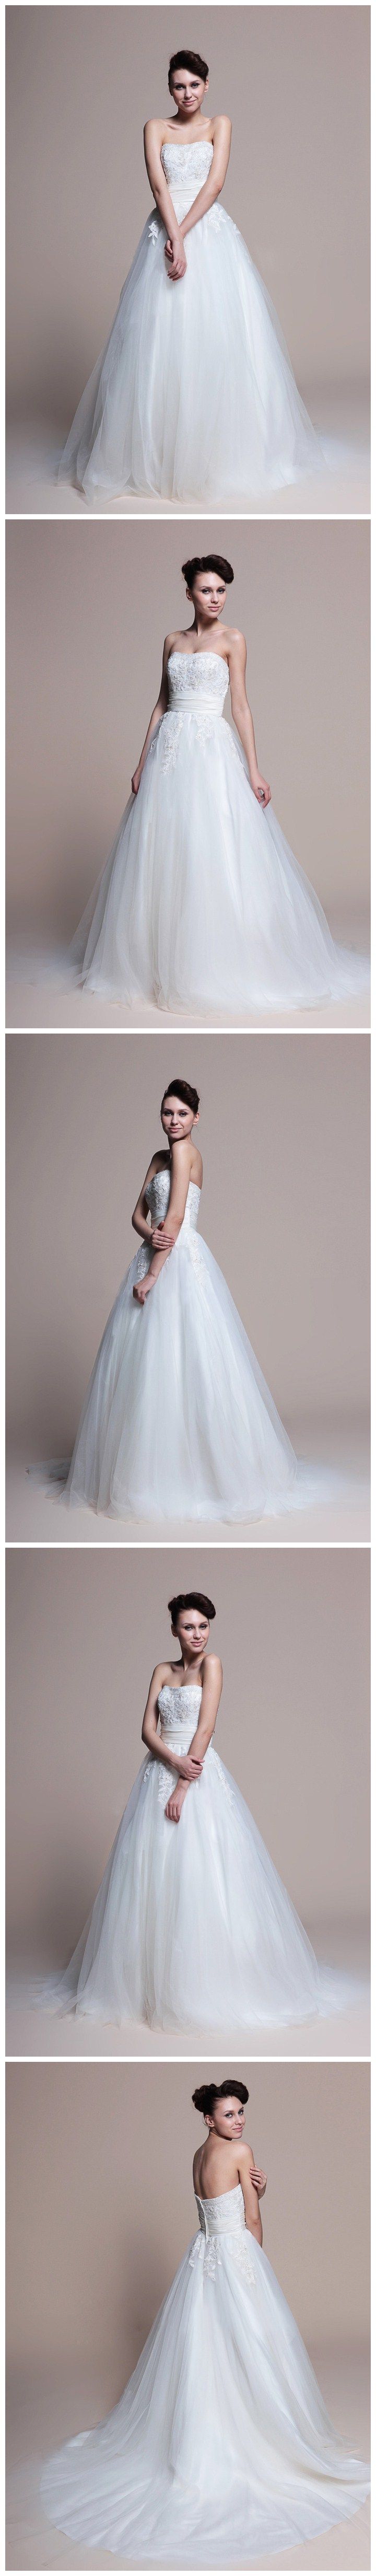 New Arrival Princess A-Line With Lace Detalied Wedding Dress